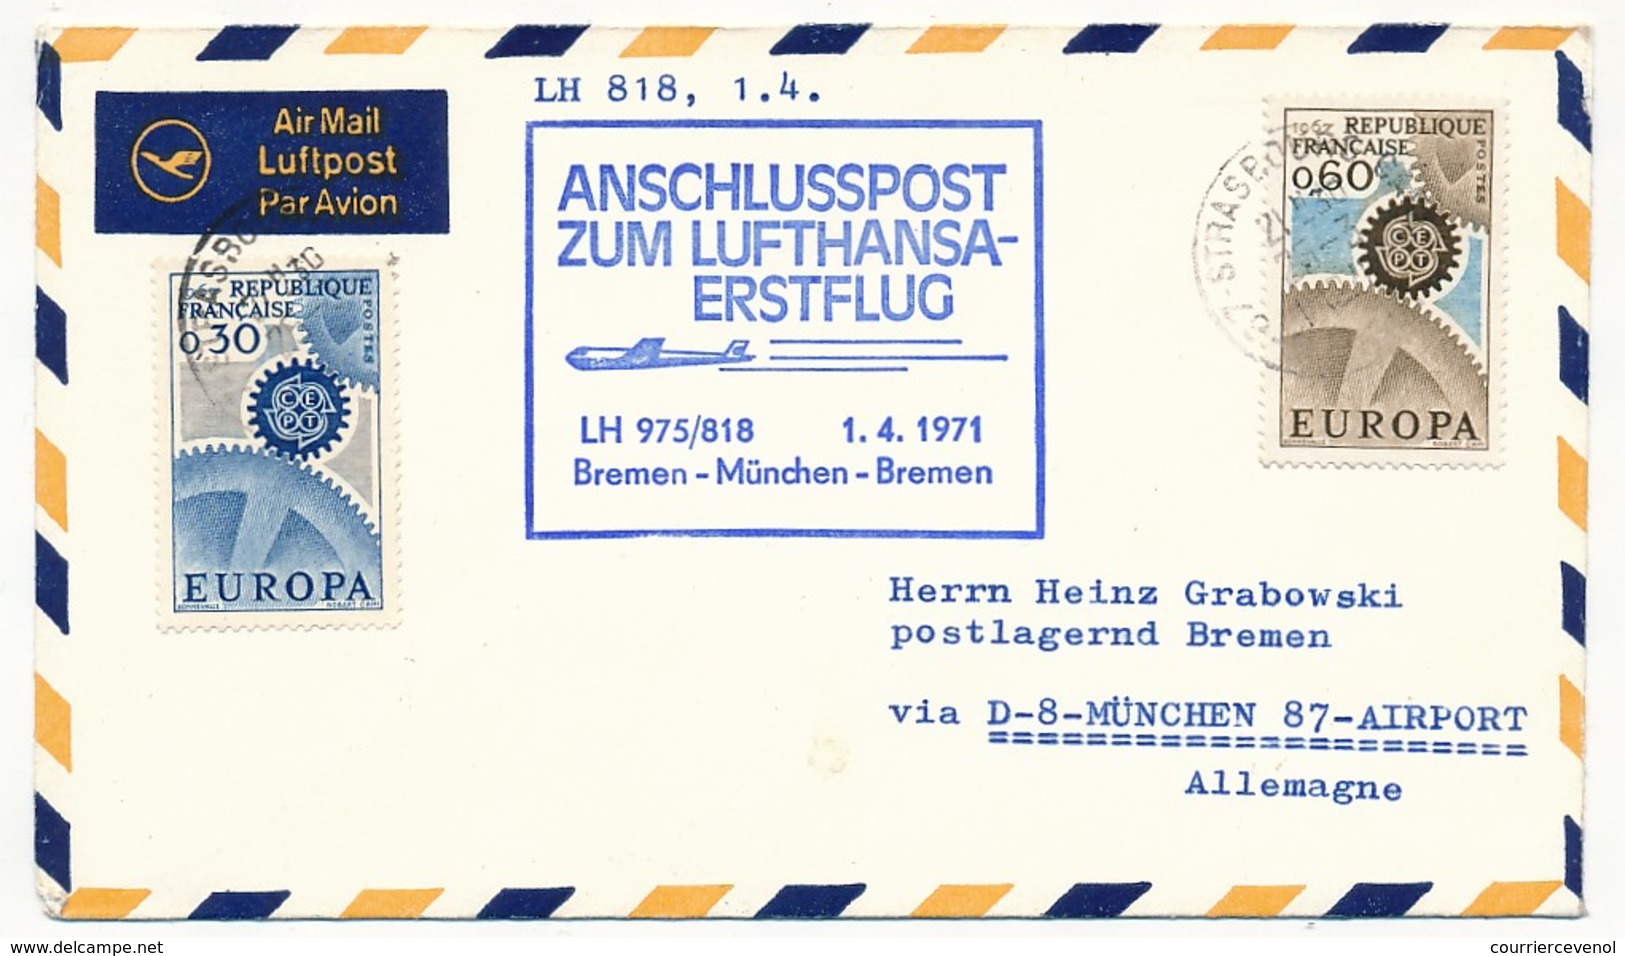 FRANCE - Enveloppe - Premier Vol BREME => MUNICH => BREME / LH 975/818 Lufthansa - 1971 - Premiers Vols